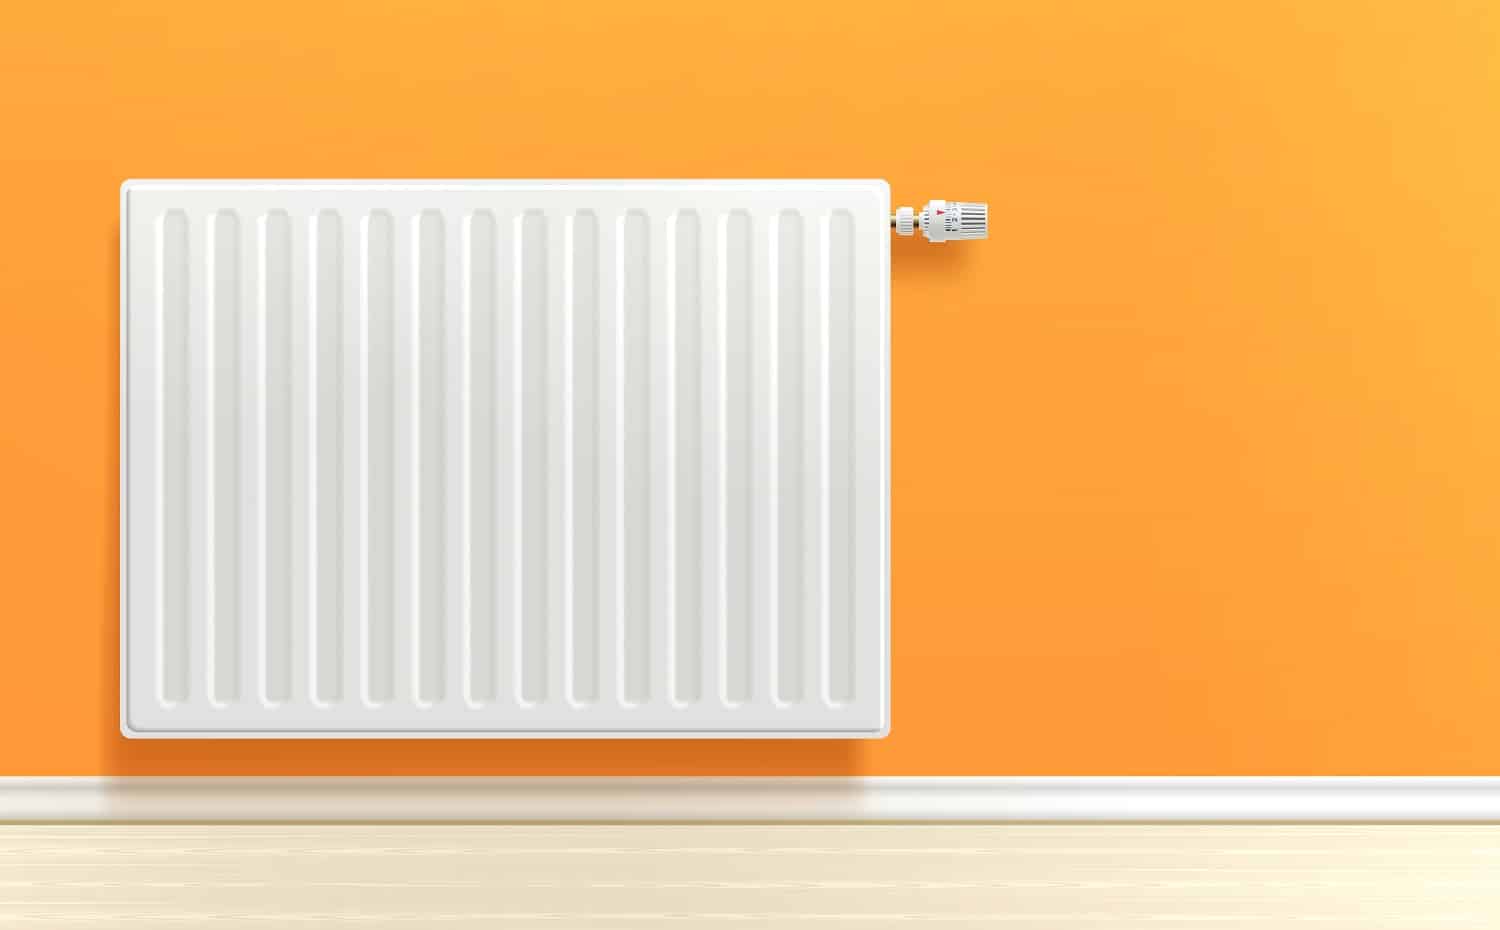 Realistic white heating radiator on orange room wall vector illustration